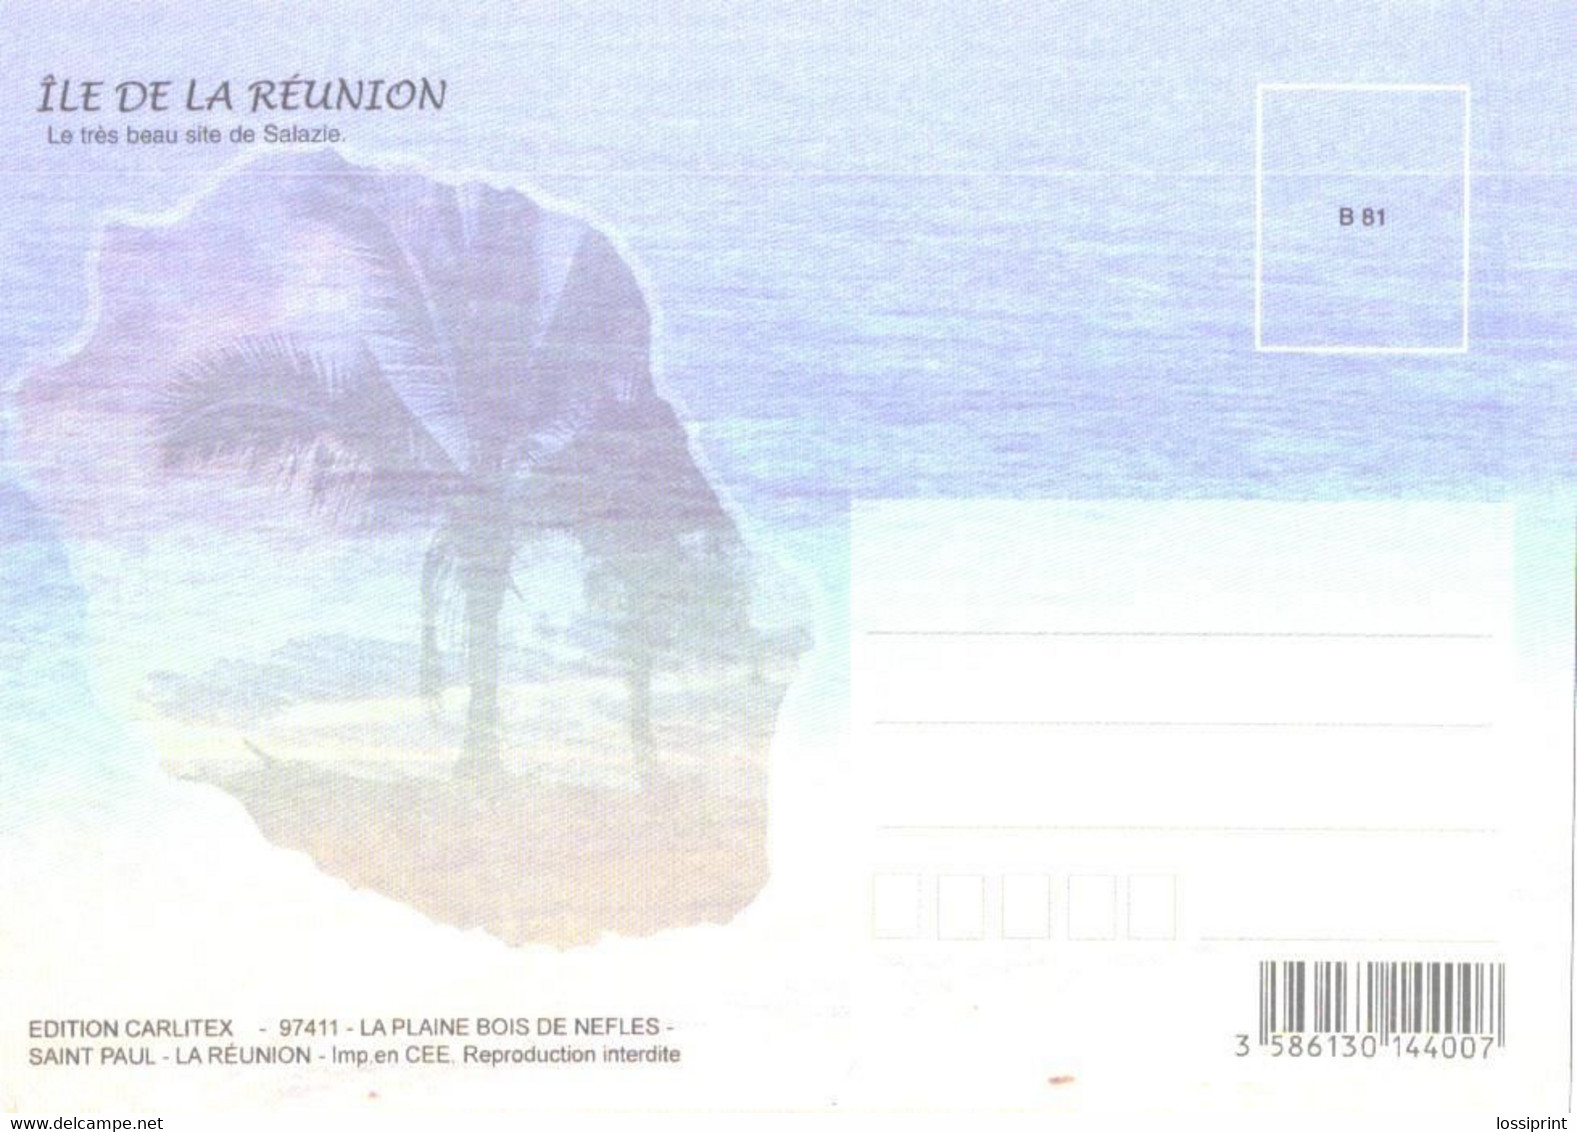 Reunion Island:Overview - Reunión